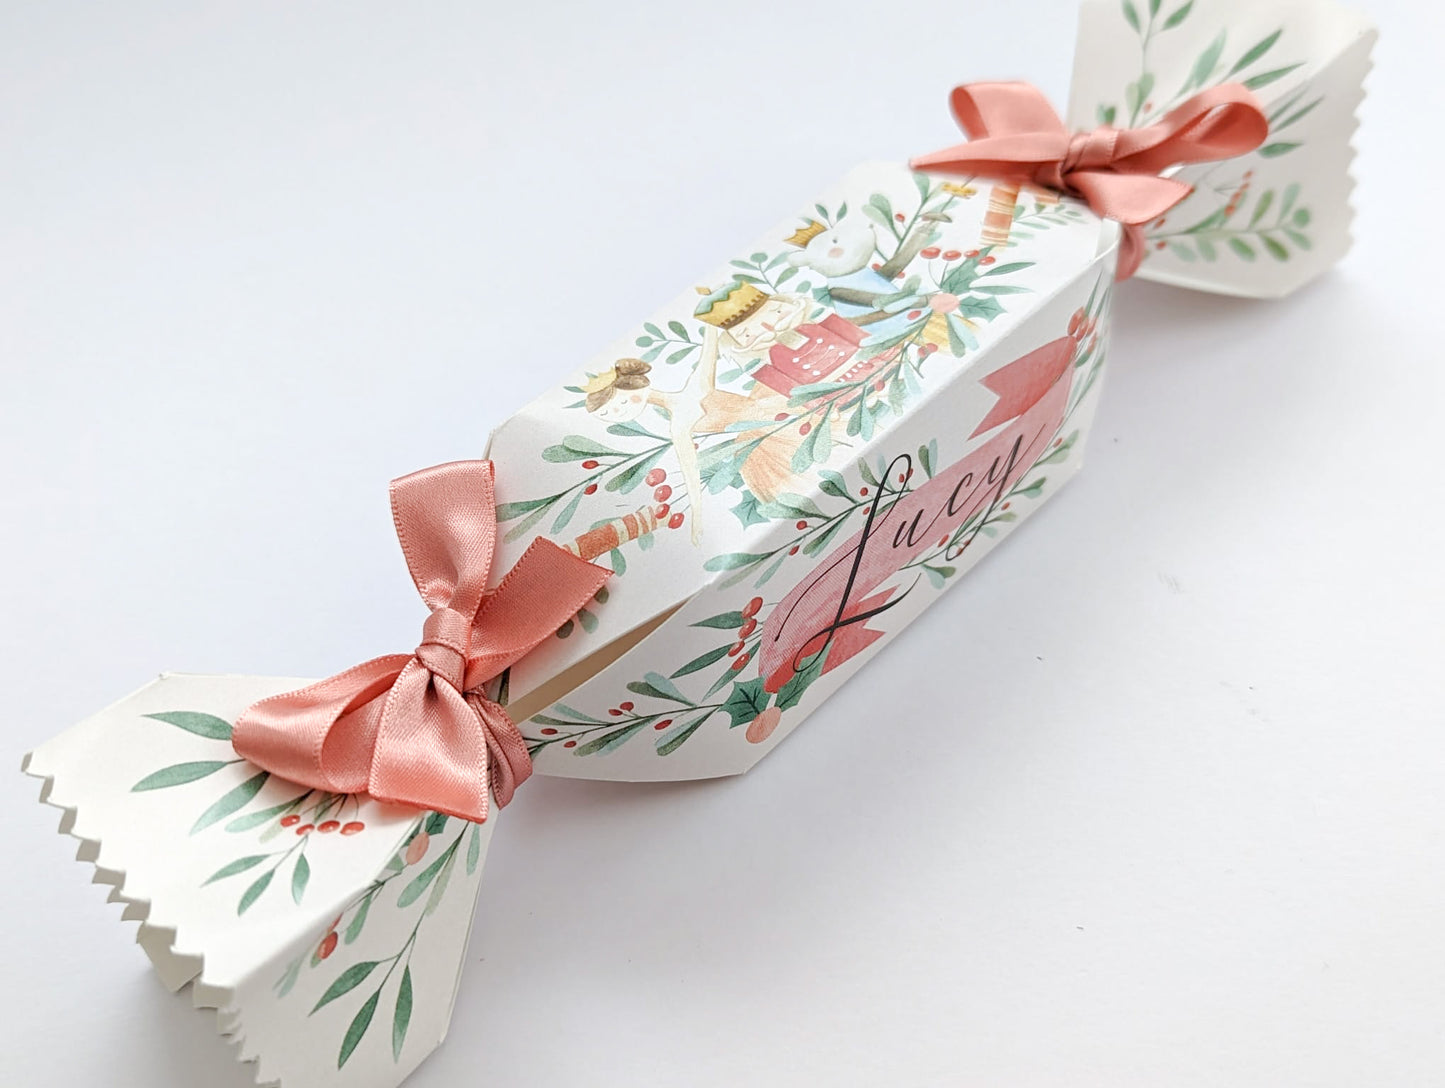 Personalised Christmas Cracker Winter Wonderland Treat Box